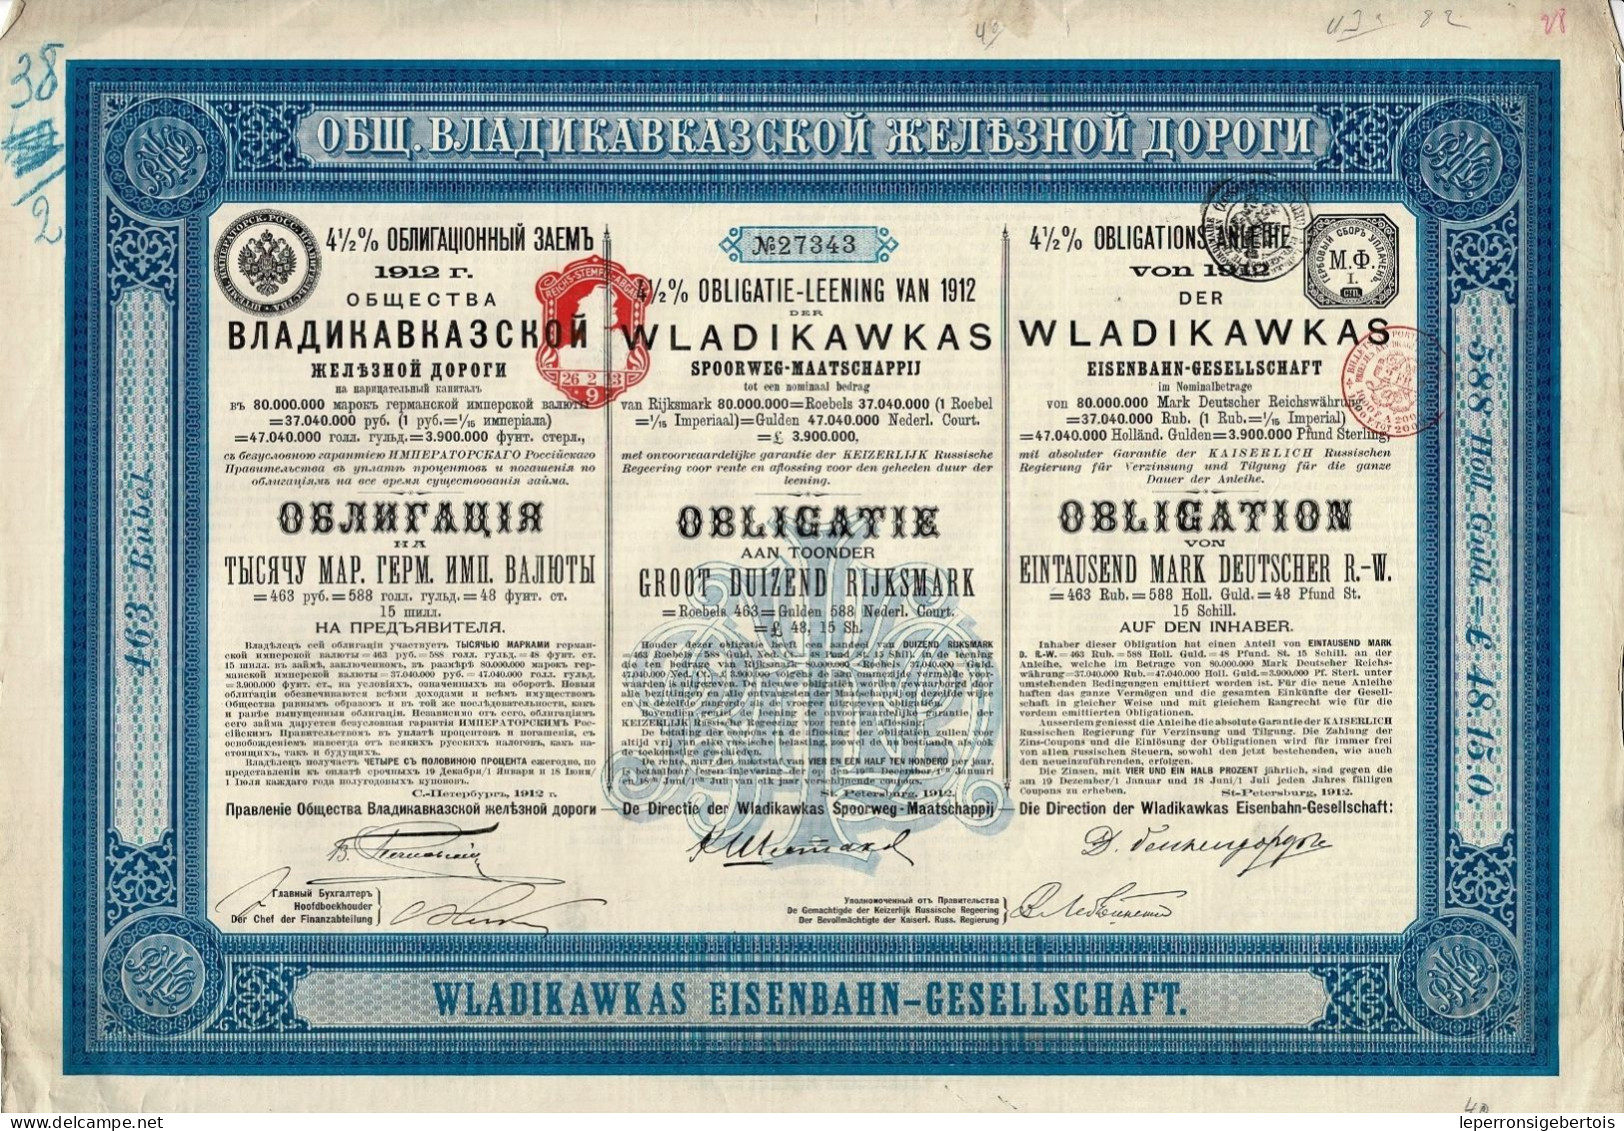 Obligation De 1912 - Obligation Mark Der Wladikawkas 4 1/2 % - Eisenbahn - Russia